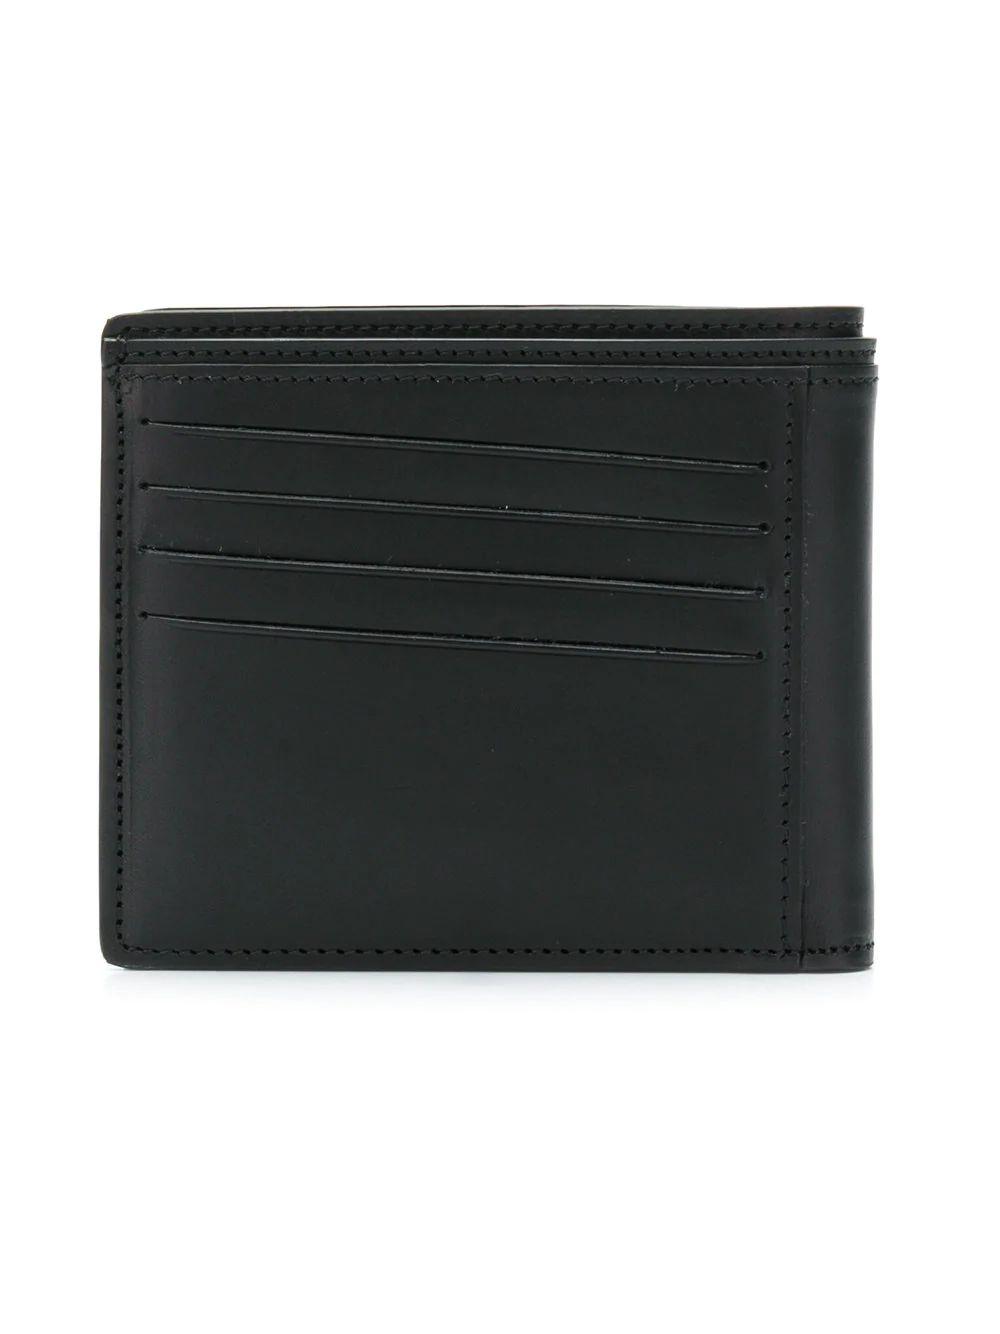 Maison Margiela Leather Wallet in Black for Men - Lyst